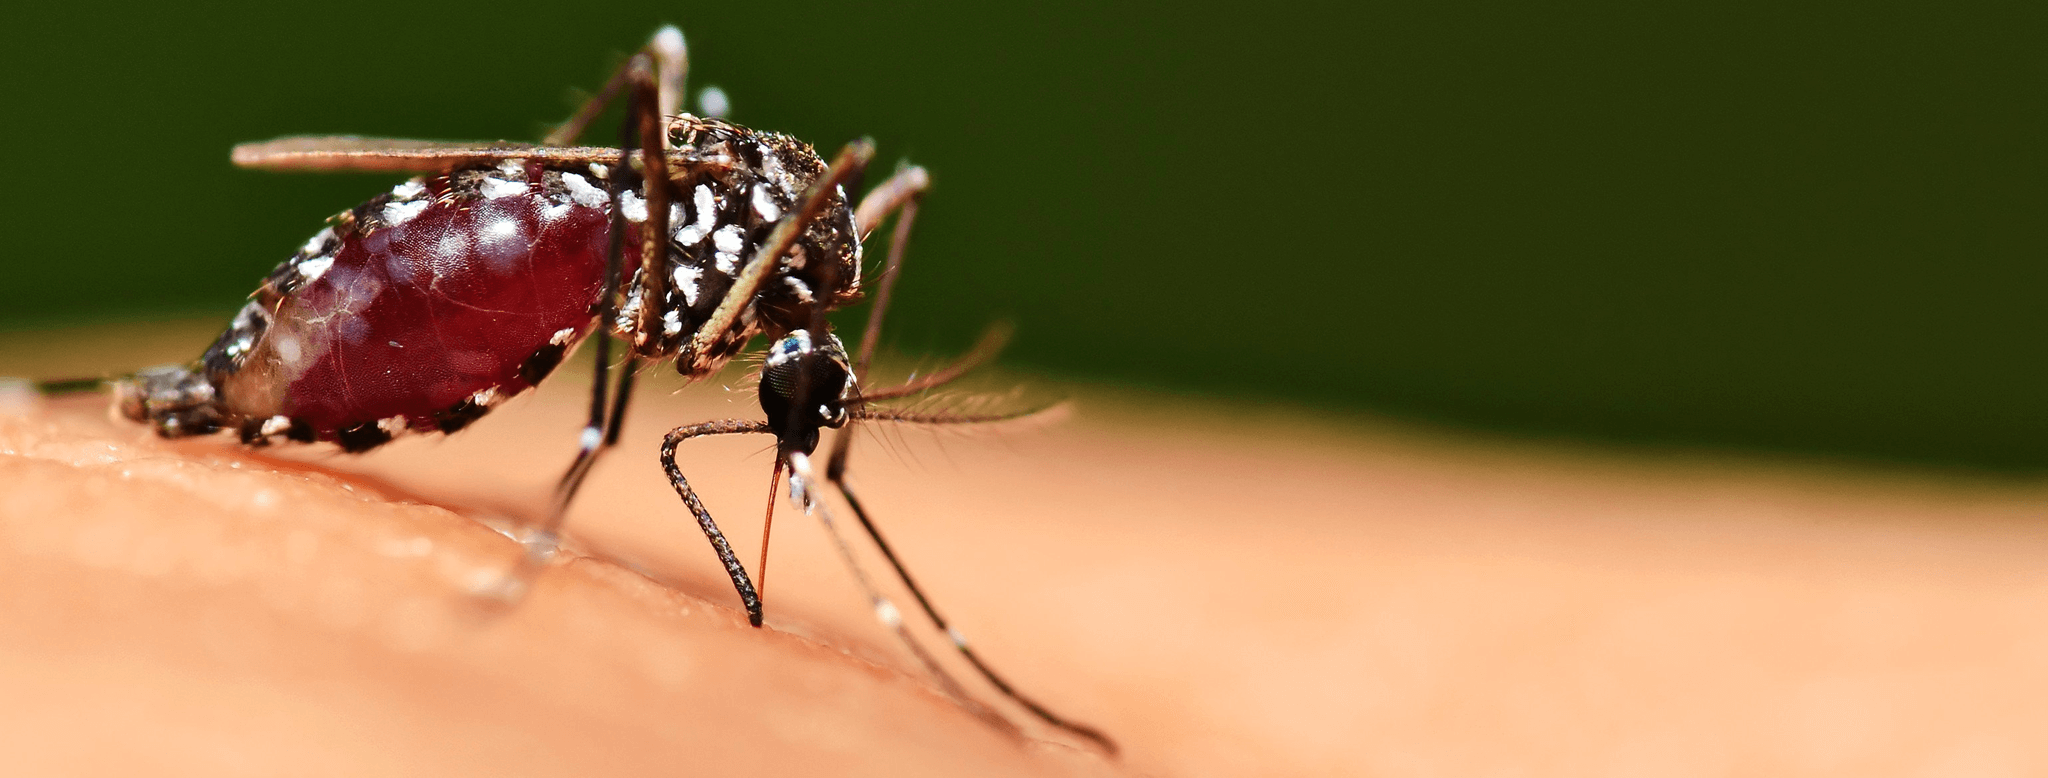 Mosquito Biting Arm Background